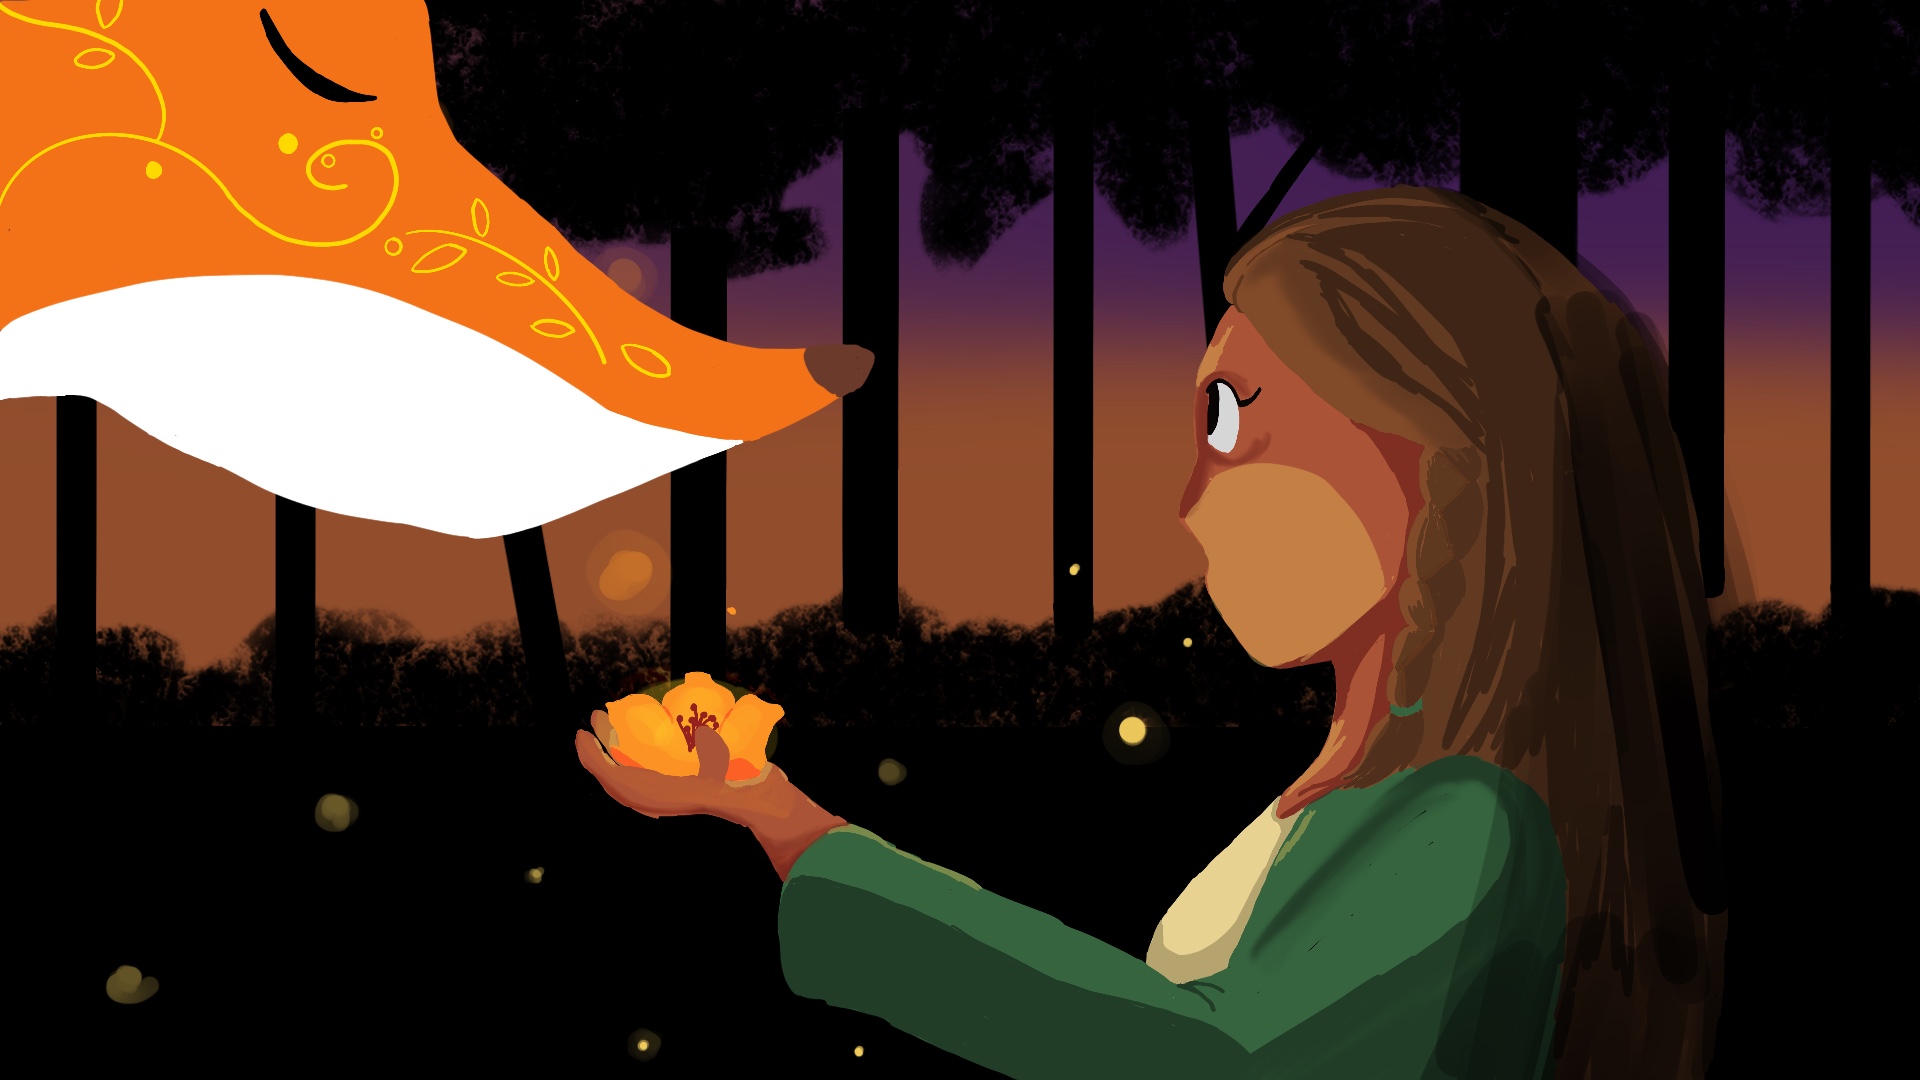 Digital Painting of a girl meeting a fox spirit.